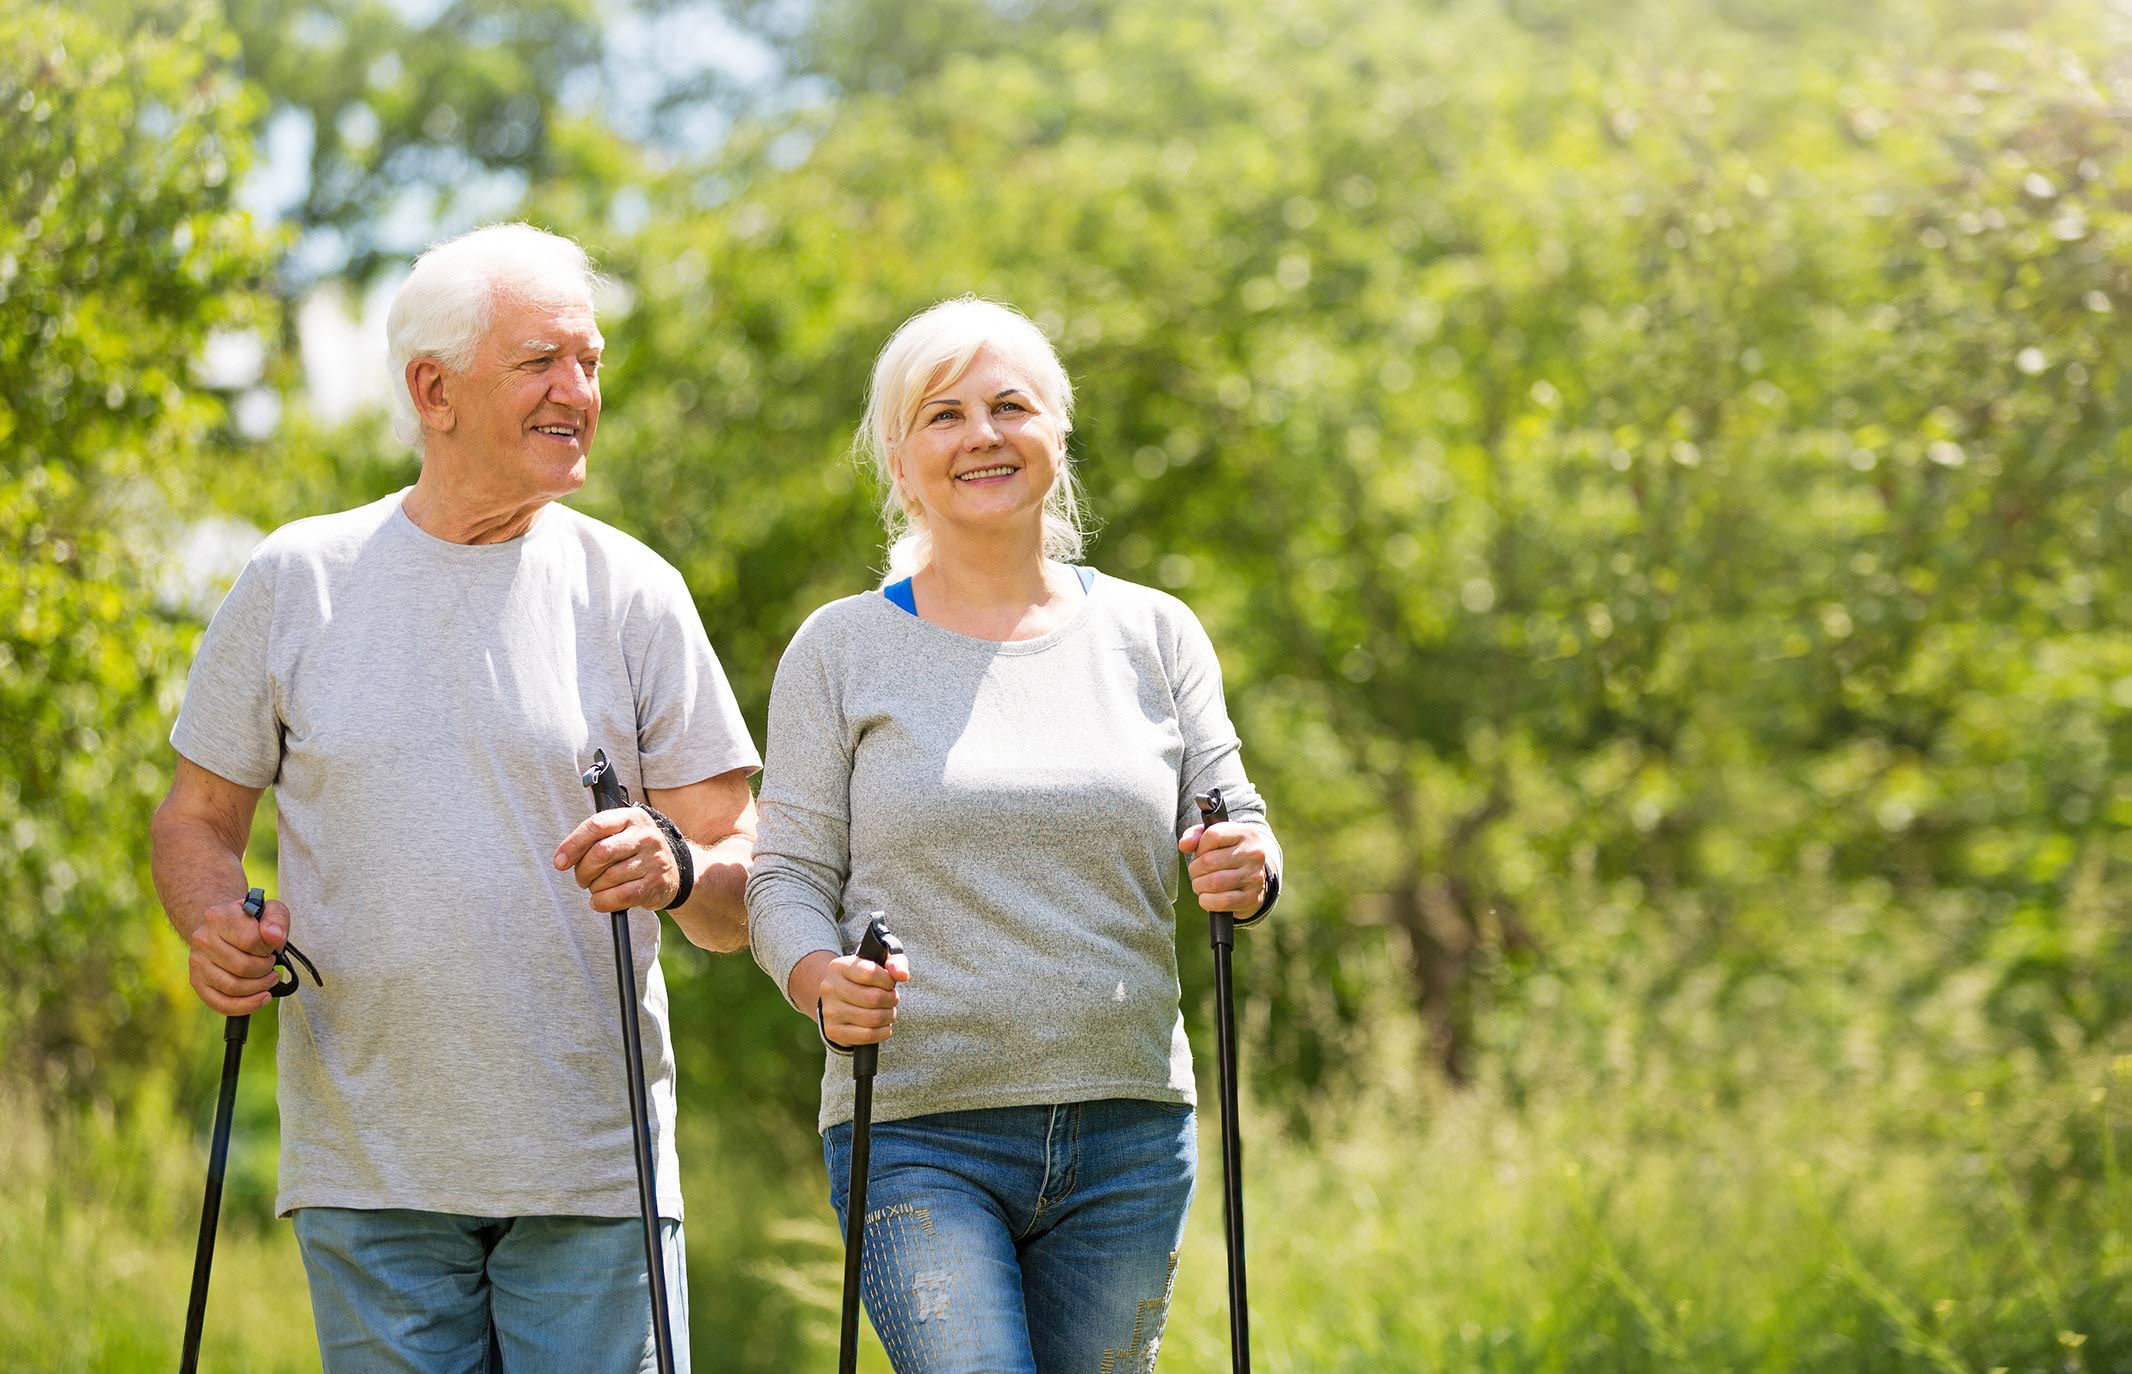 exercise-elderly-walking-couple-happy